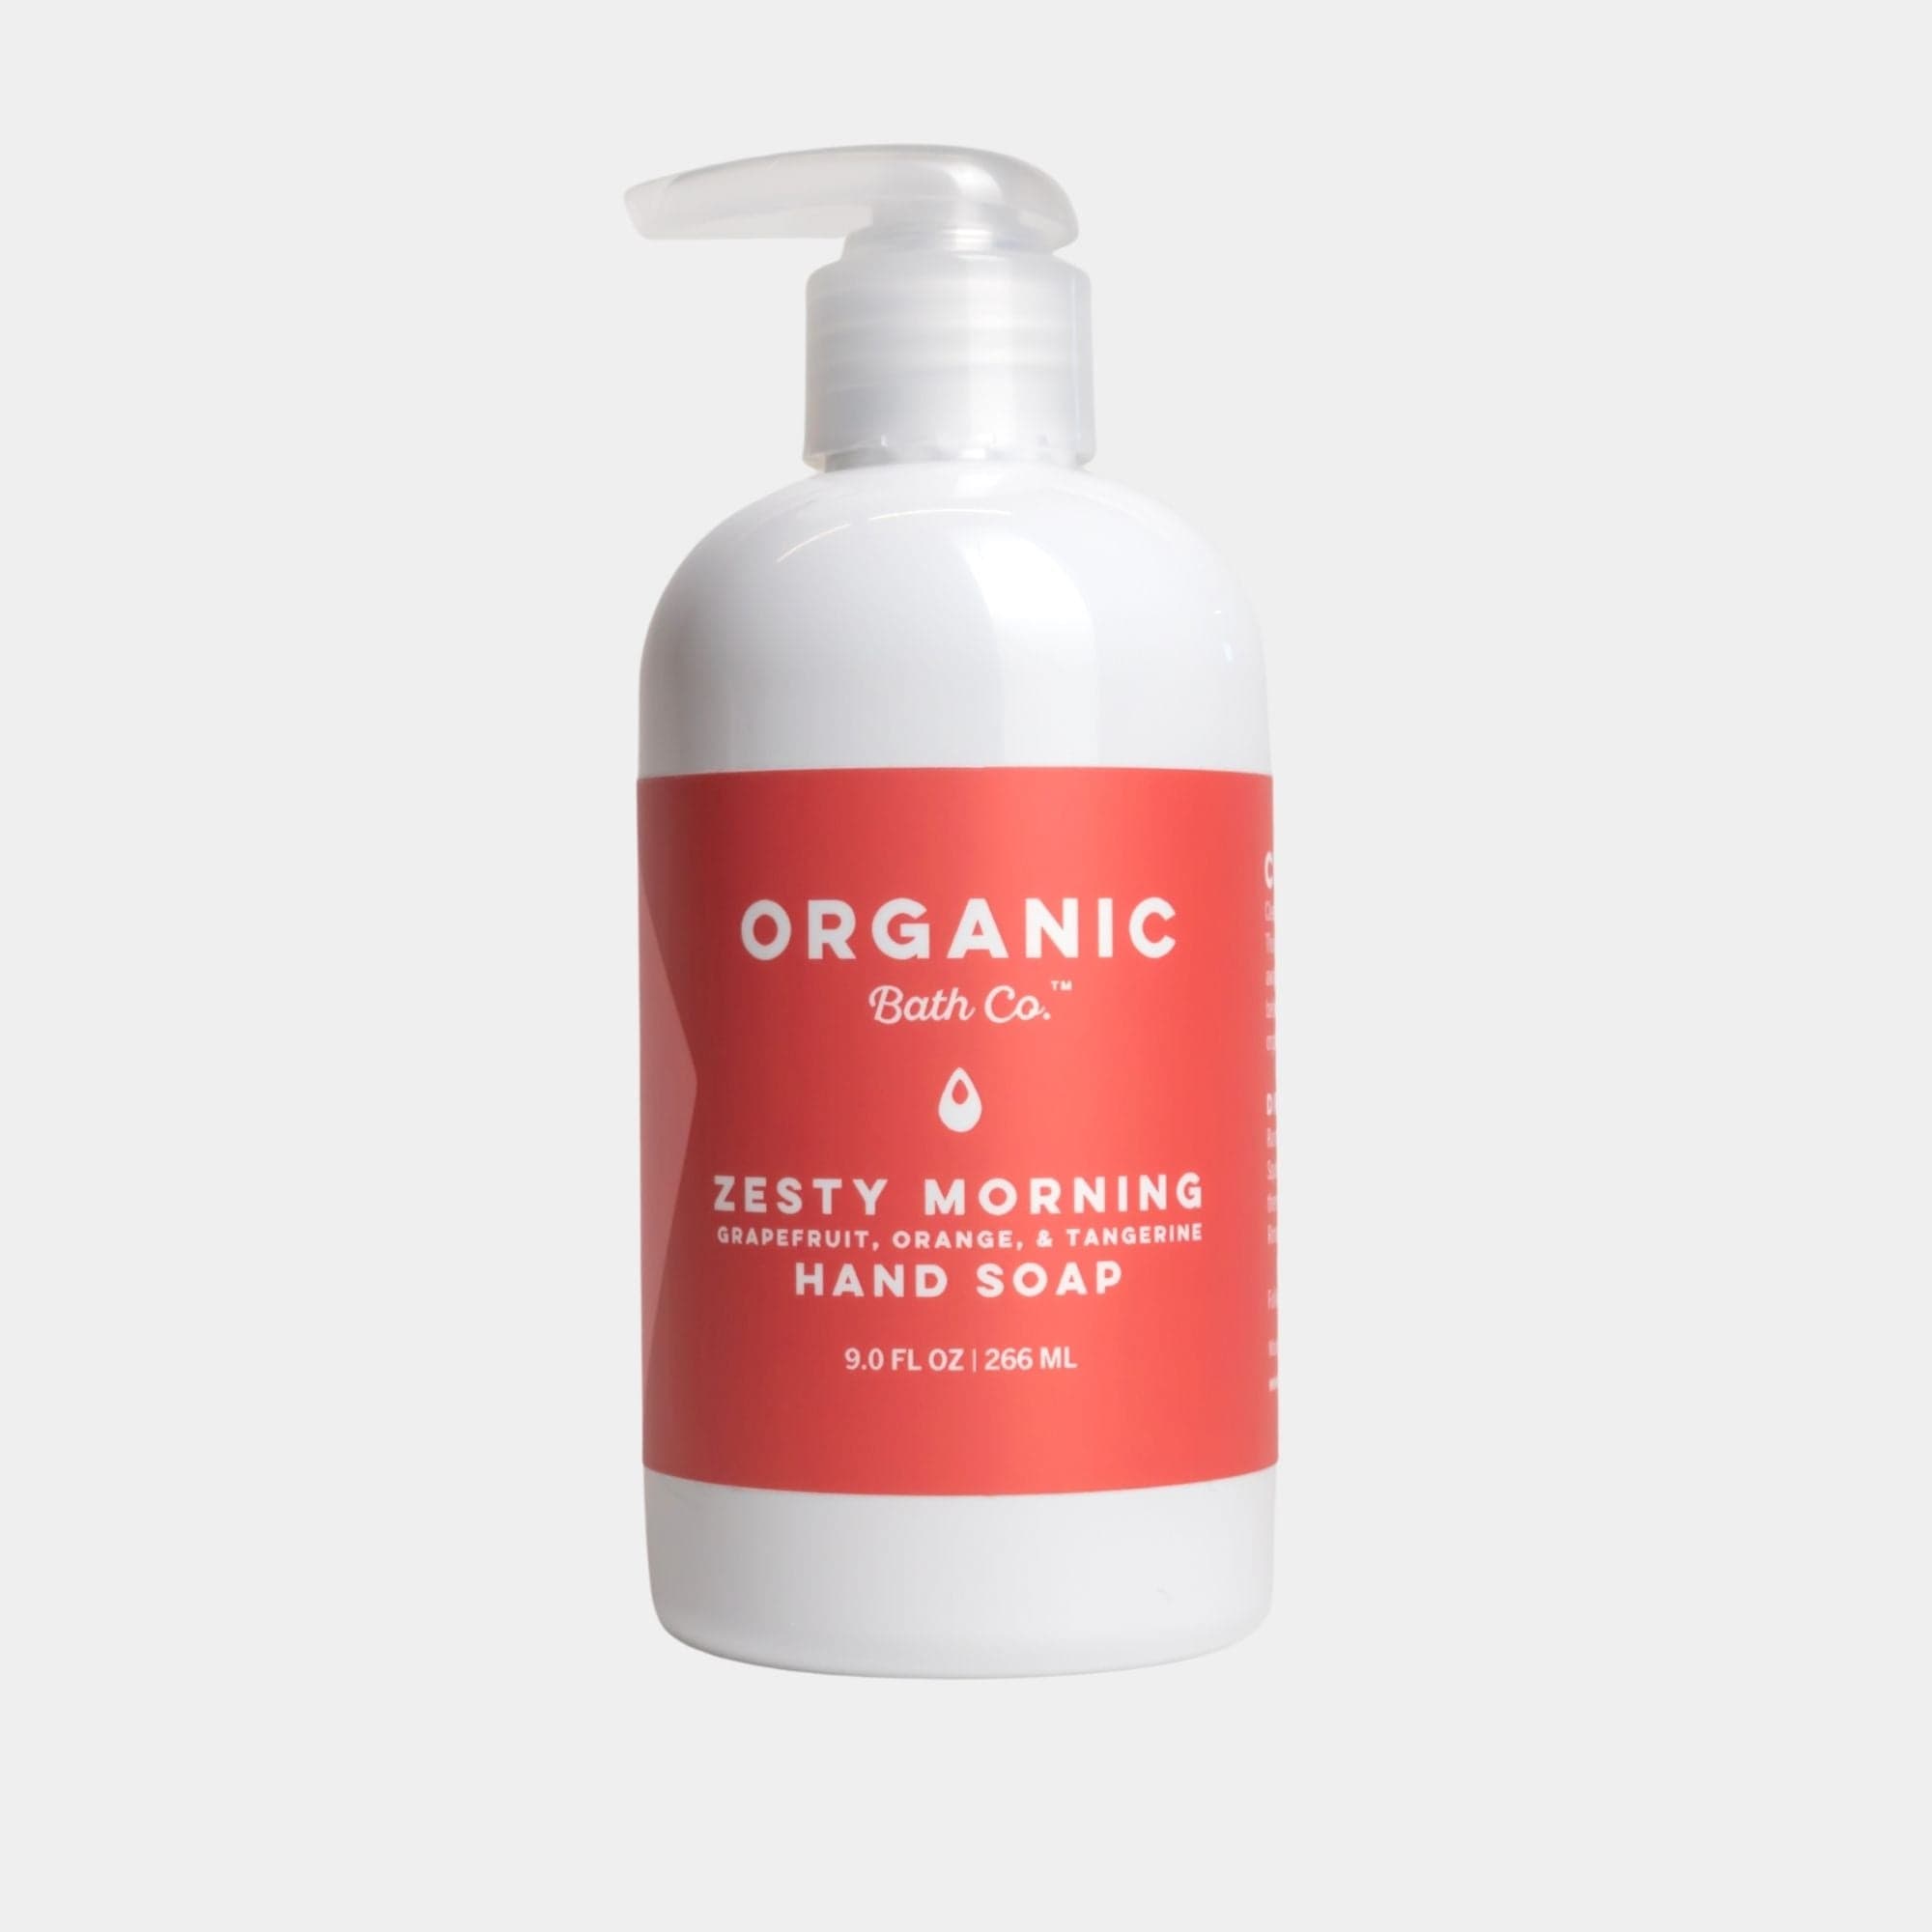 Zesty Morning Hand Soap - Organic Bath Co.